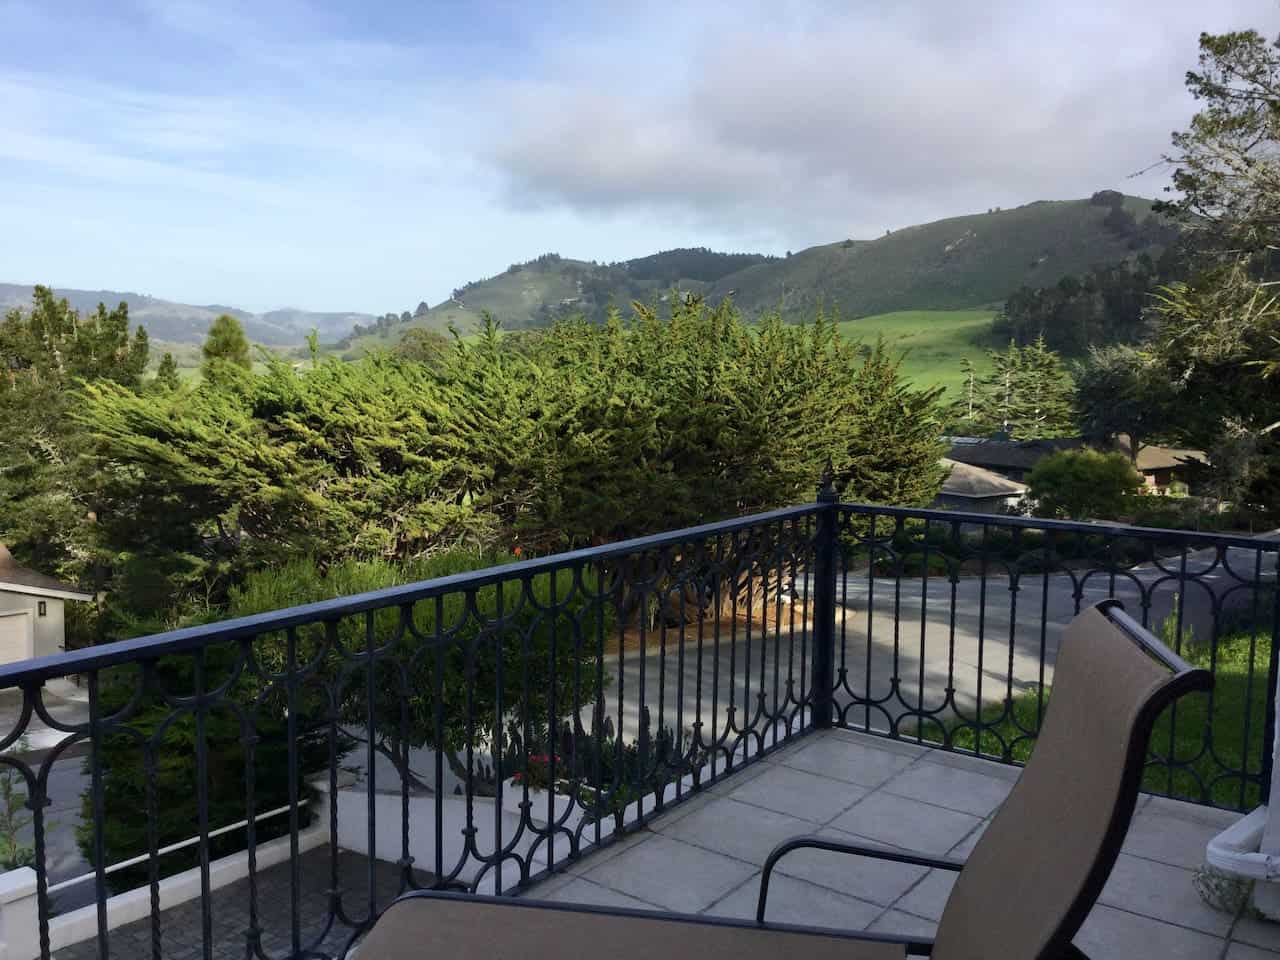 Image of Airbnb rental in Monterey California